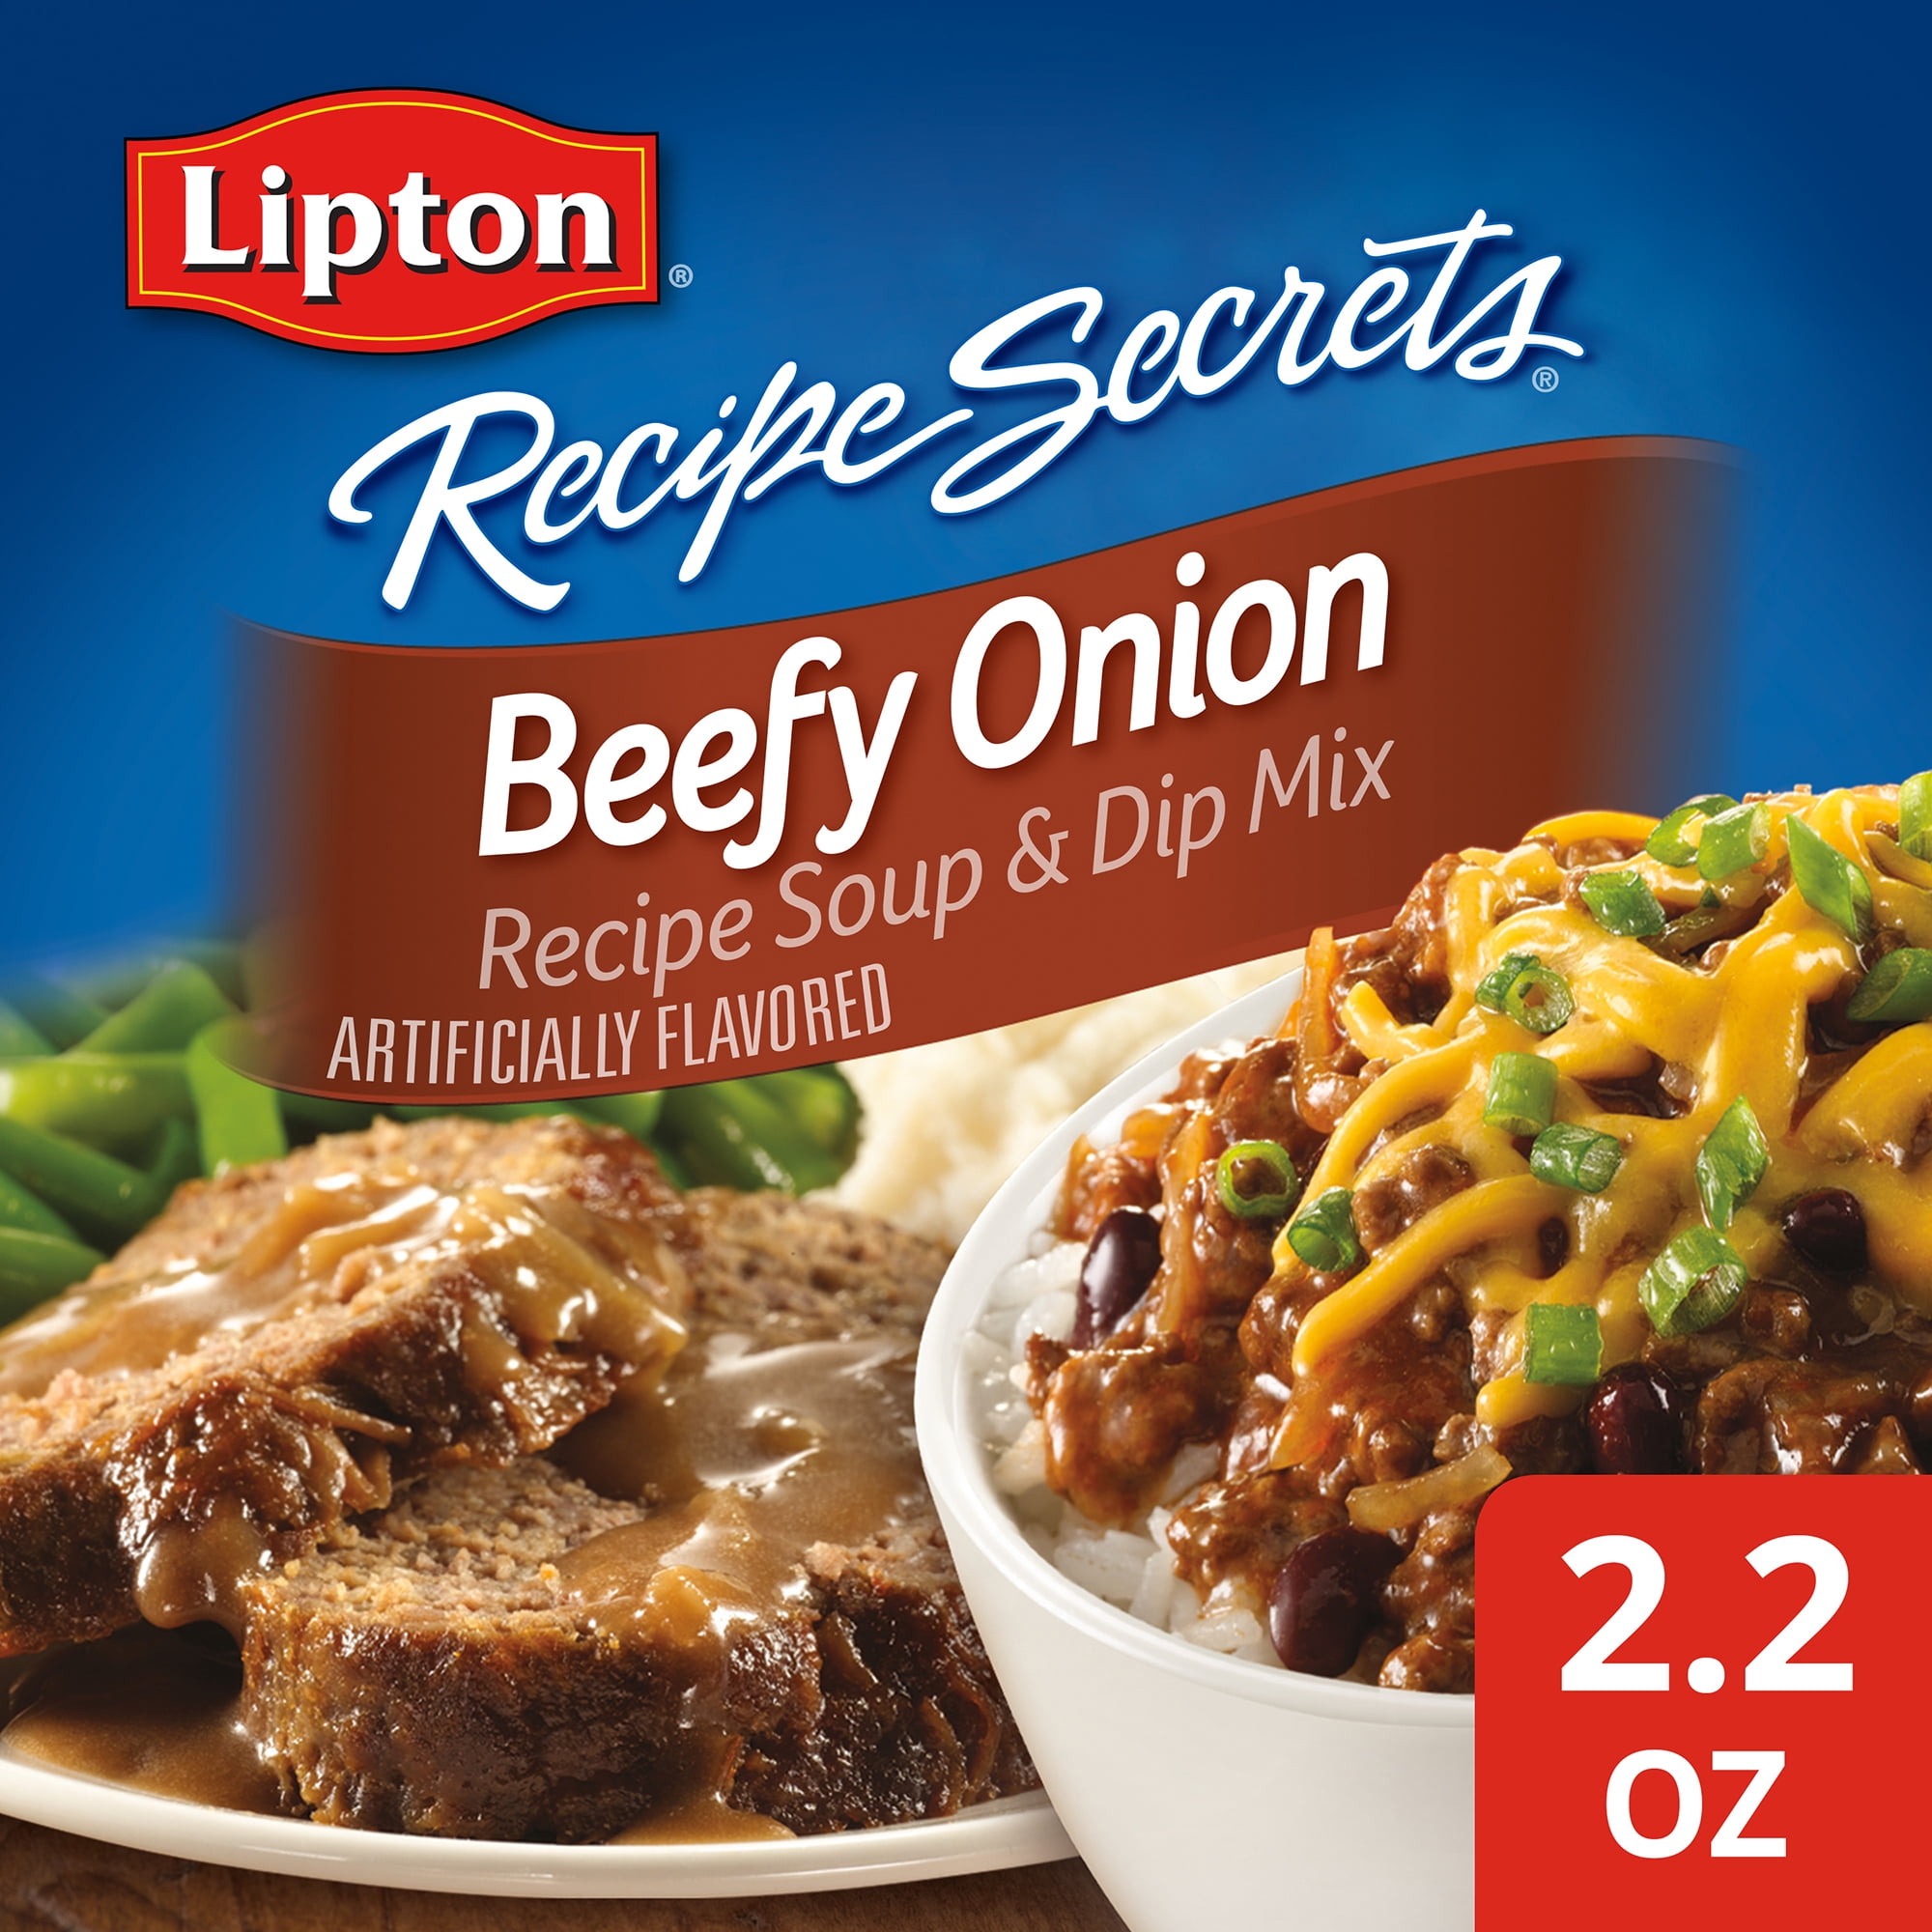 Buy Lipton Recipe Secrets Onion Soup Mix ( 56g / 2oz )